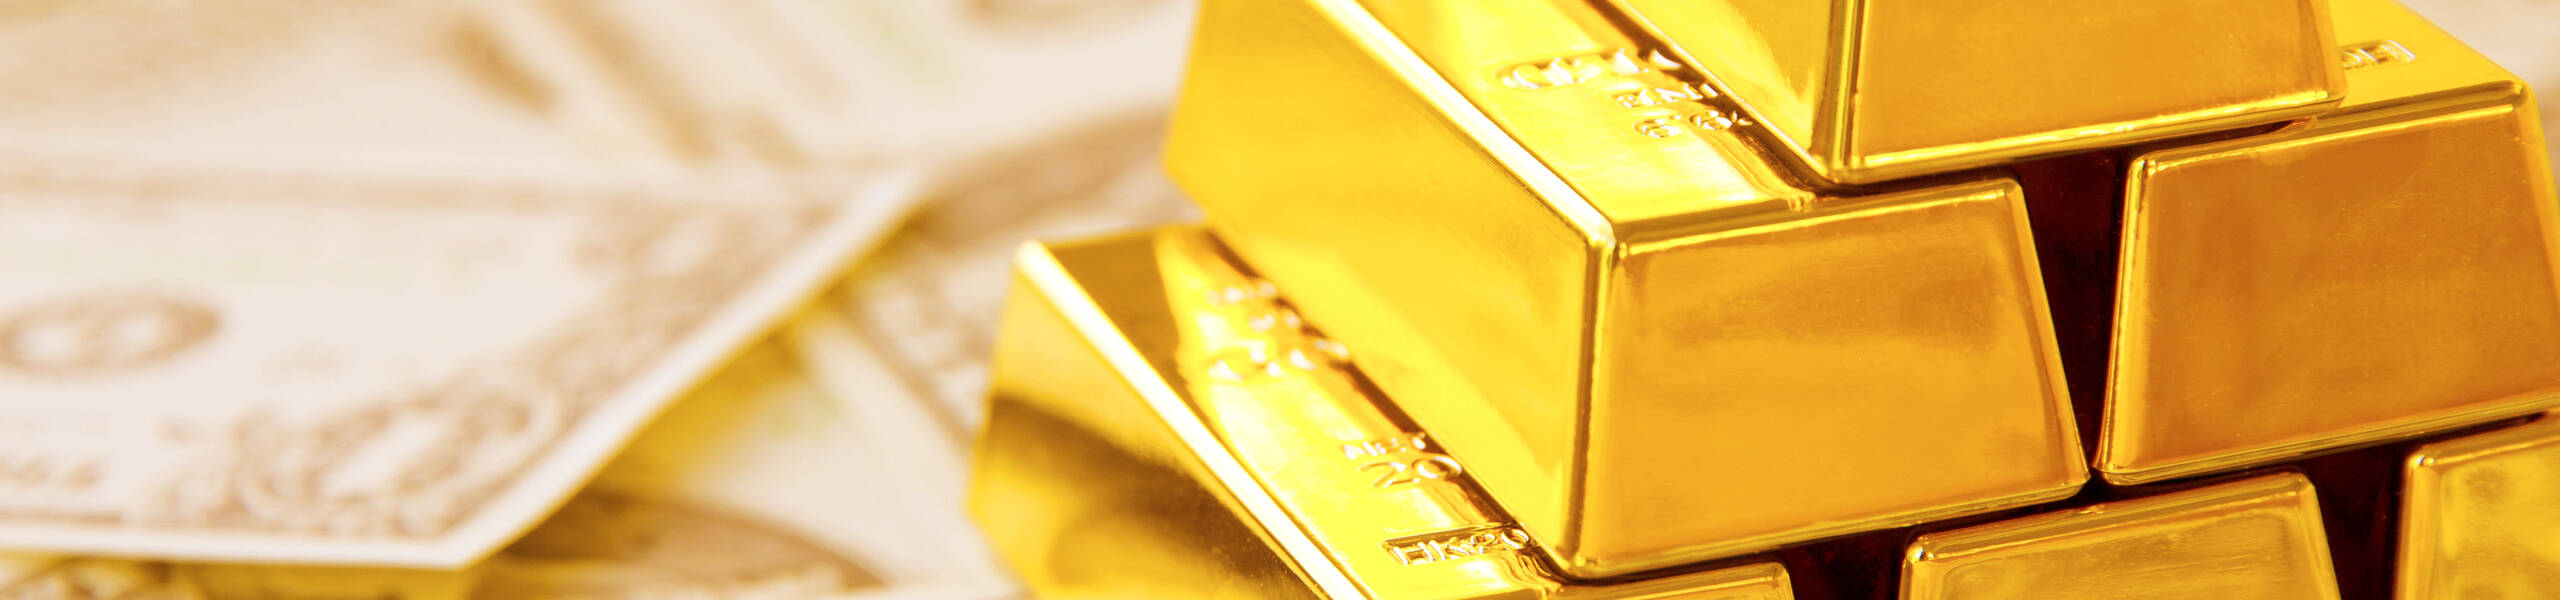 Harga Emas (XAU/USD) Masih Berada di Kisaran $1,900 